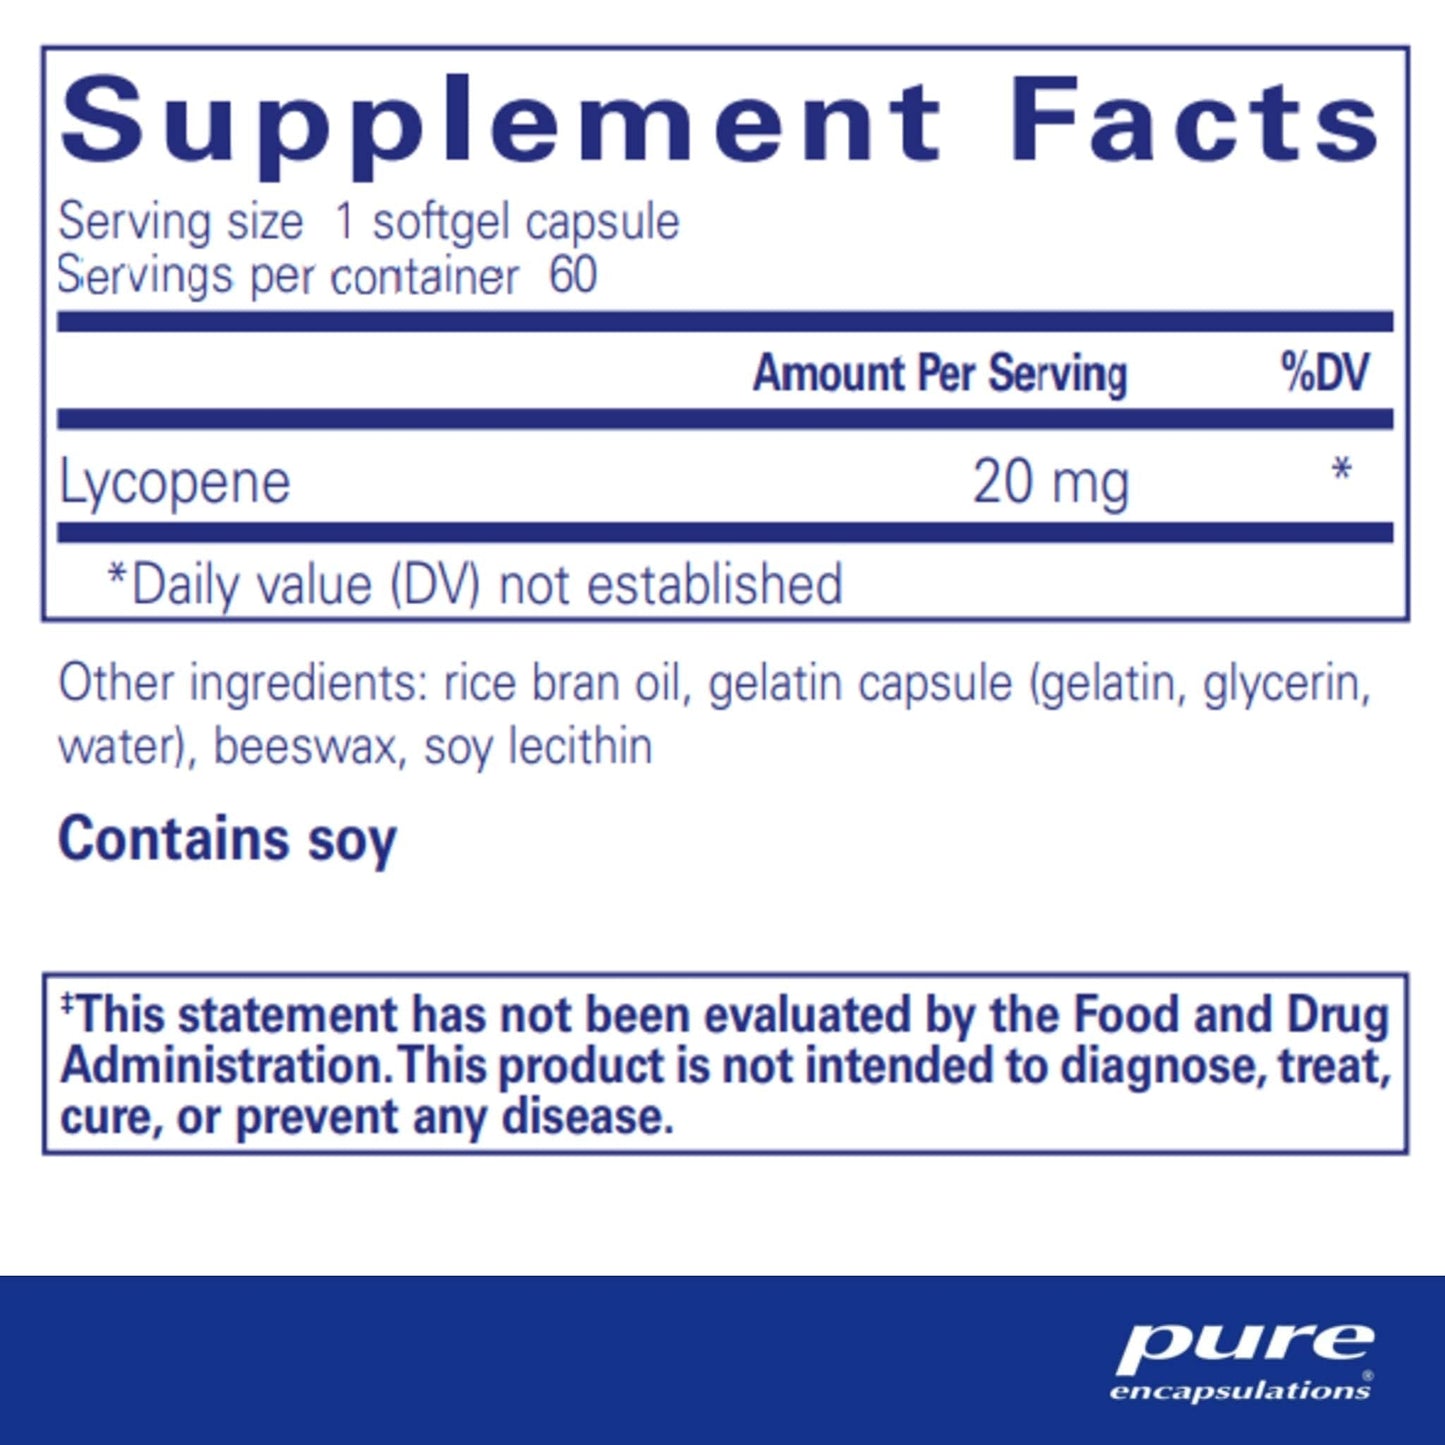 Lycopene 20 mg.